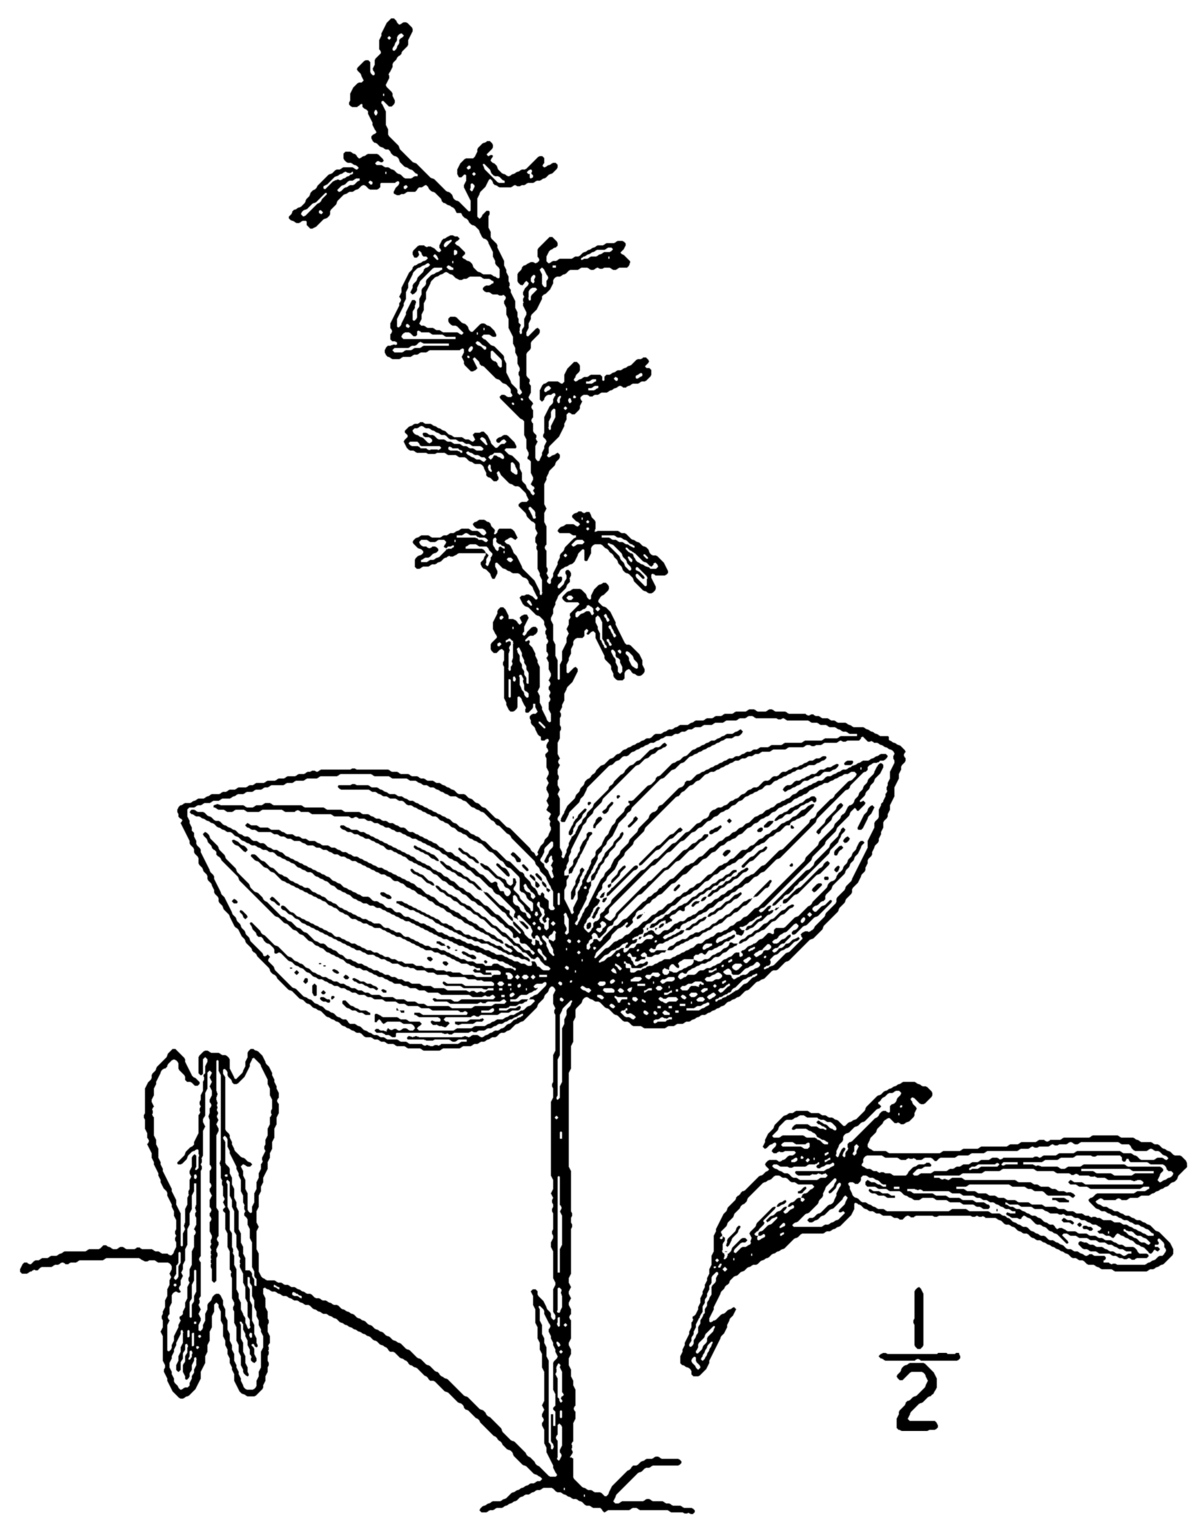 Neottia auriculata - Wikipedia